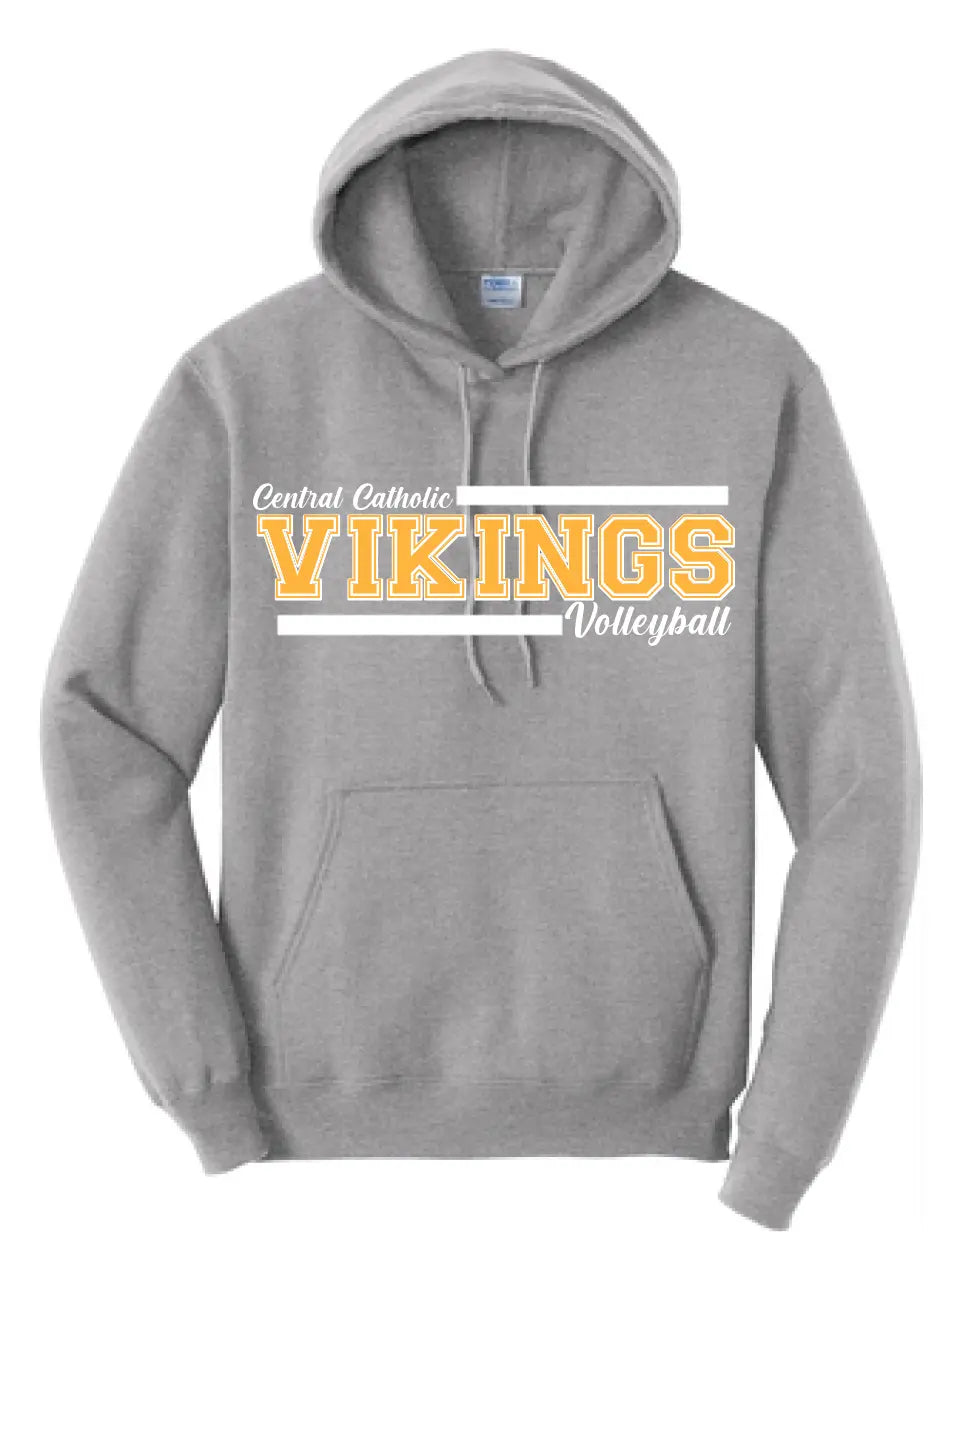 Custom School Design 3 - Long Sleeve Core Blend Hooded Sweatshirt